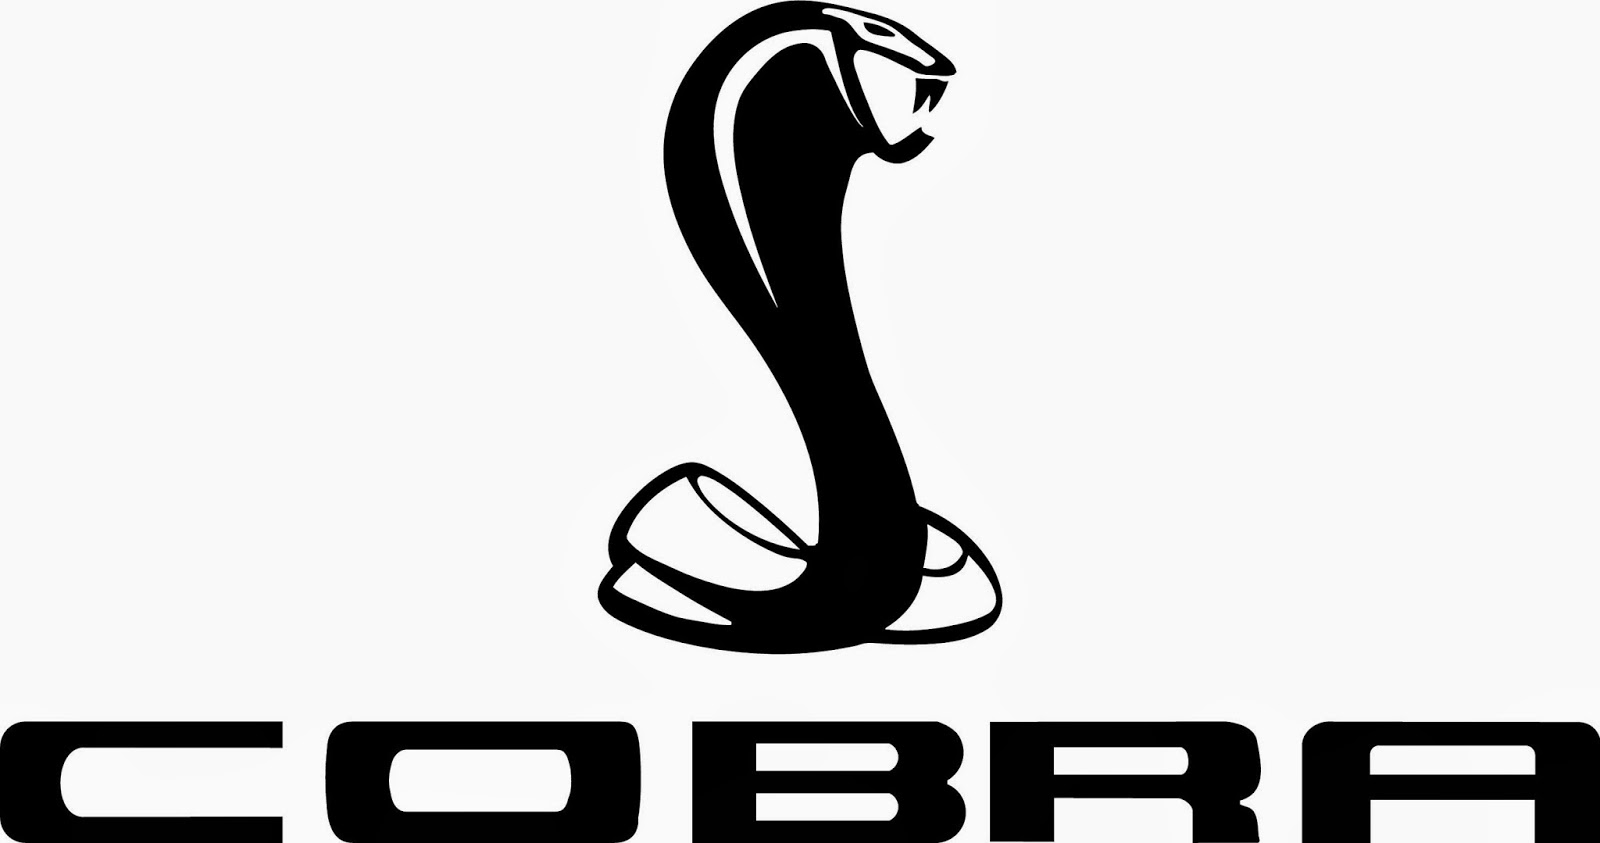 Cobra ford logo #6